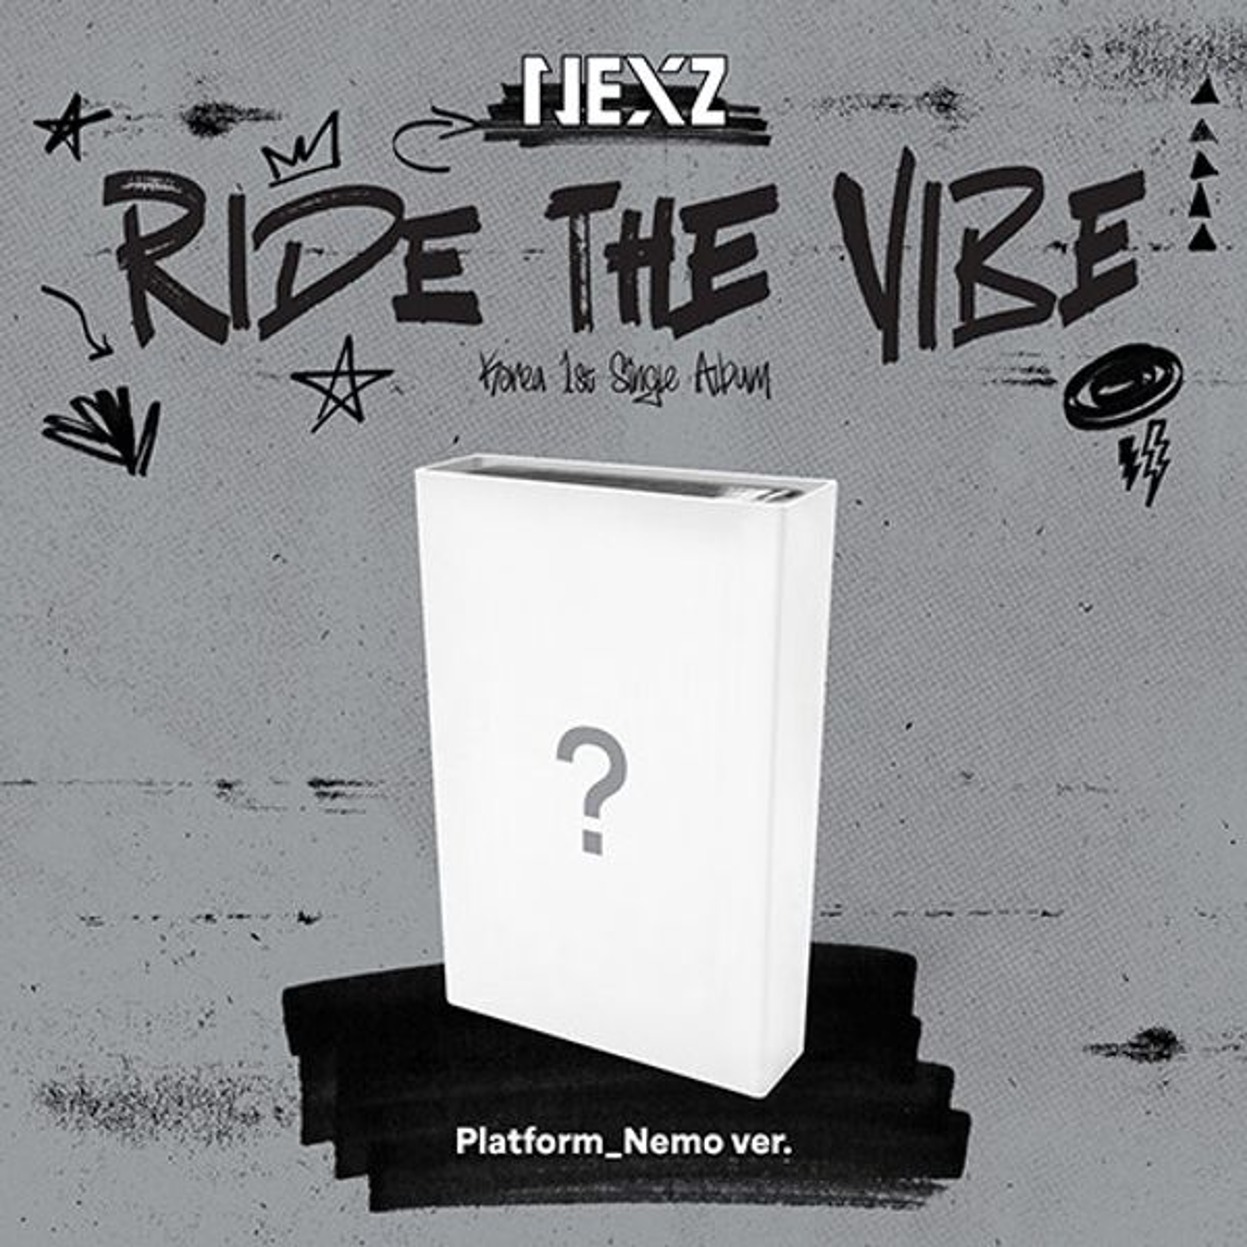 NEXZ - 1st single album [Ride the Vibe] (SPECIAL EDITION)